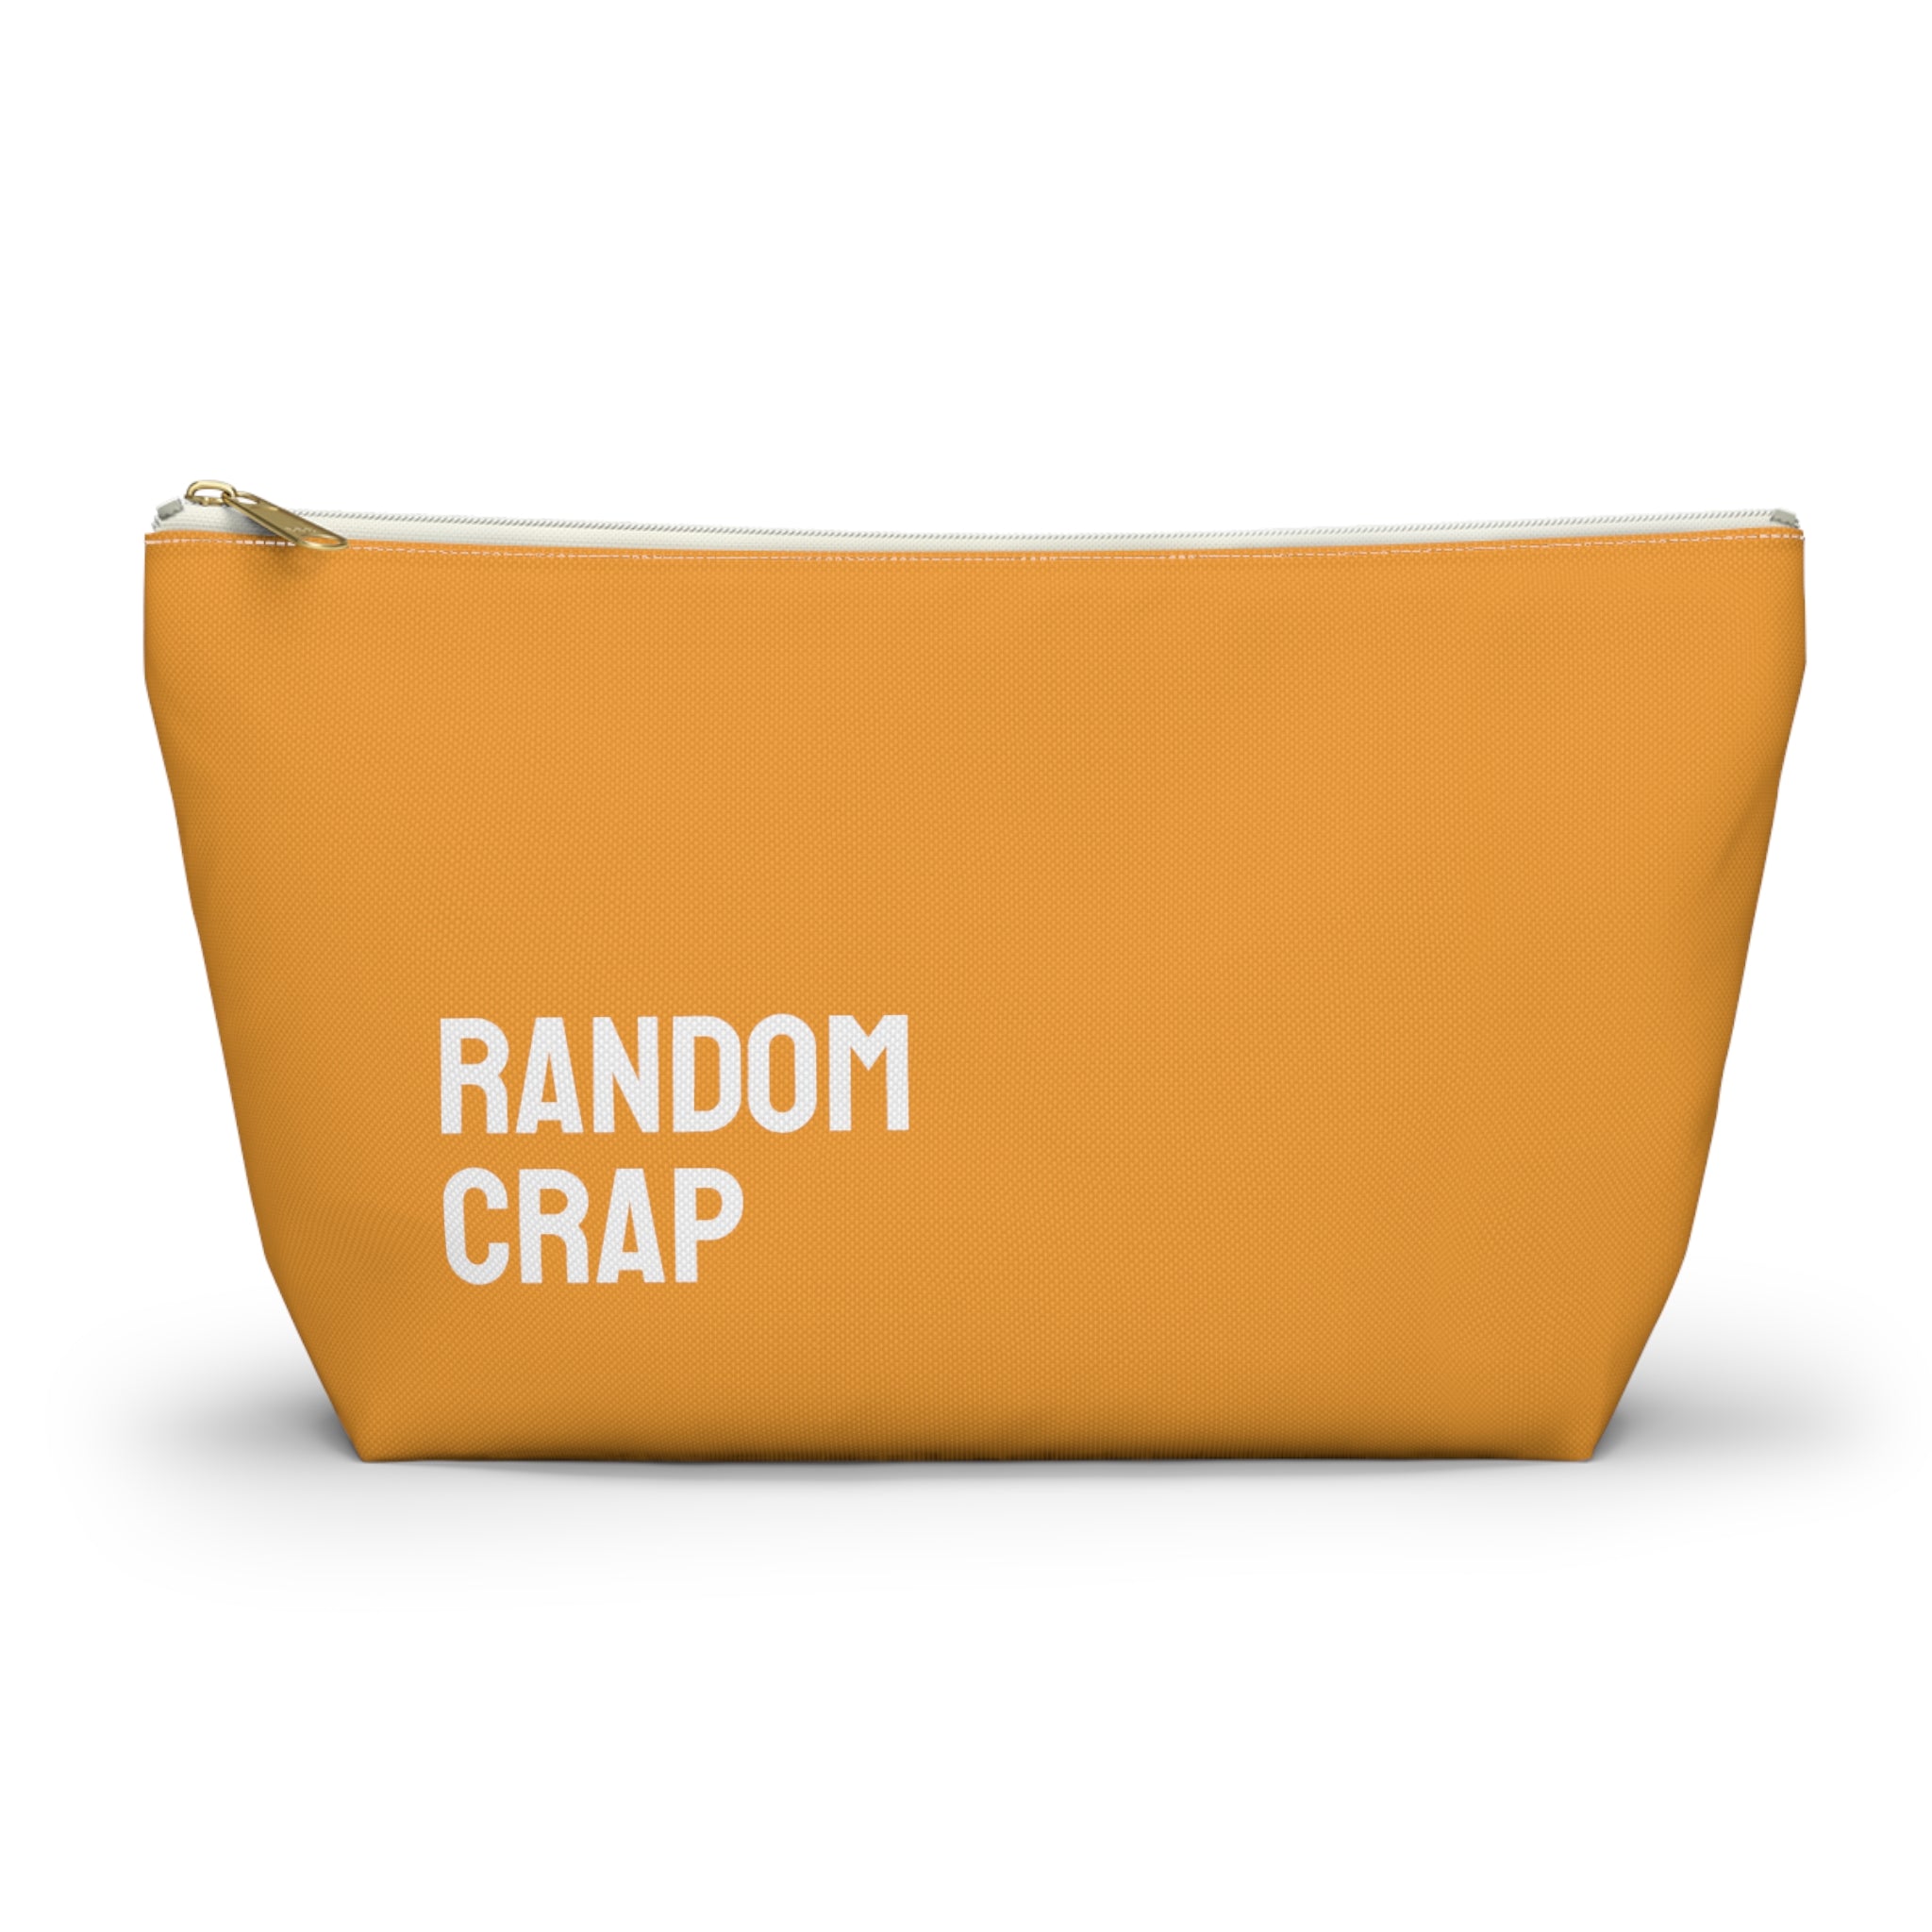 Random crap Pouch (Orange)